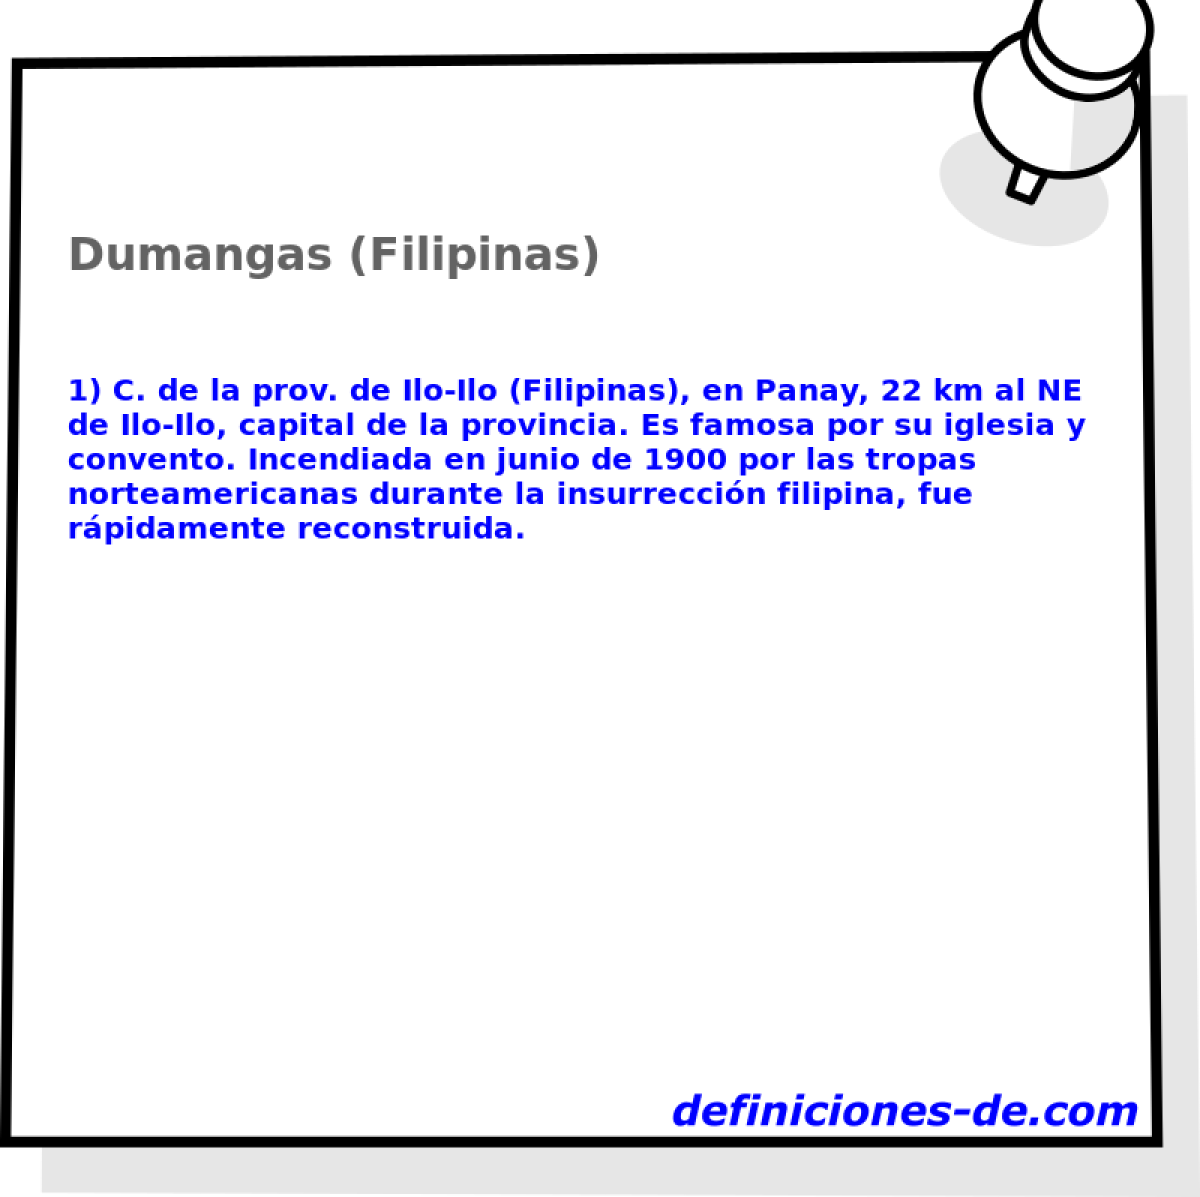 Dumangas (Filipinas) 